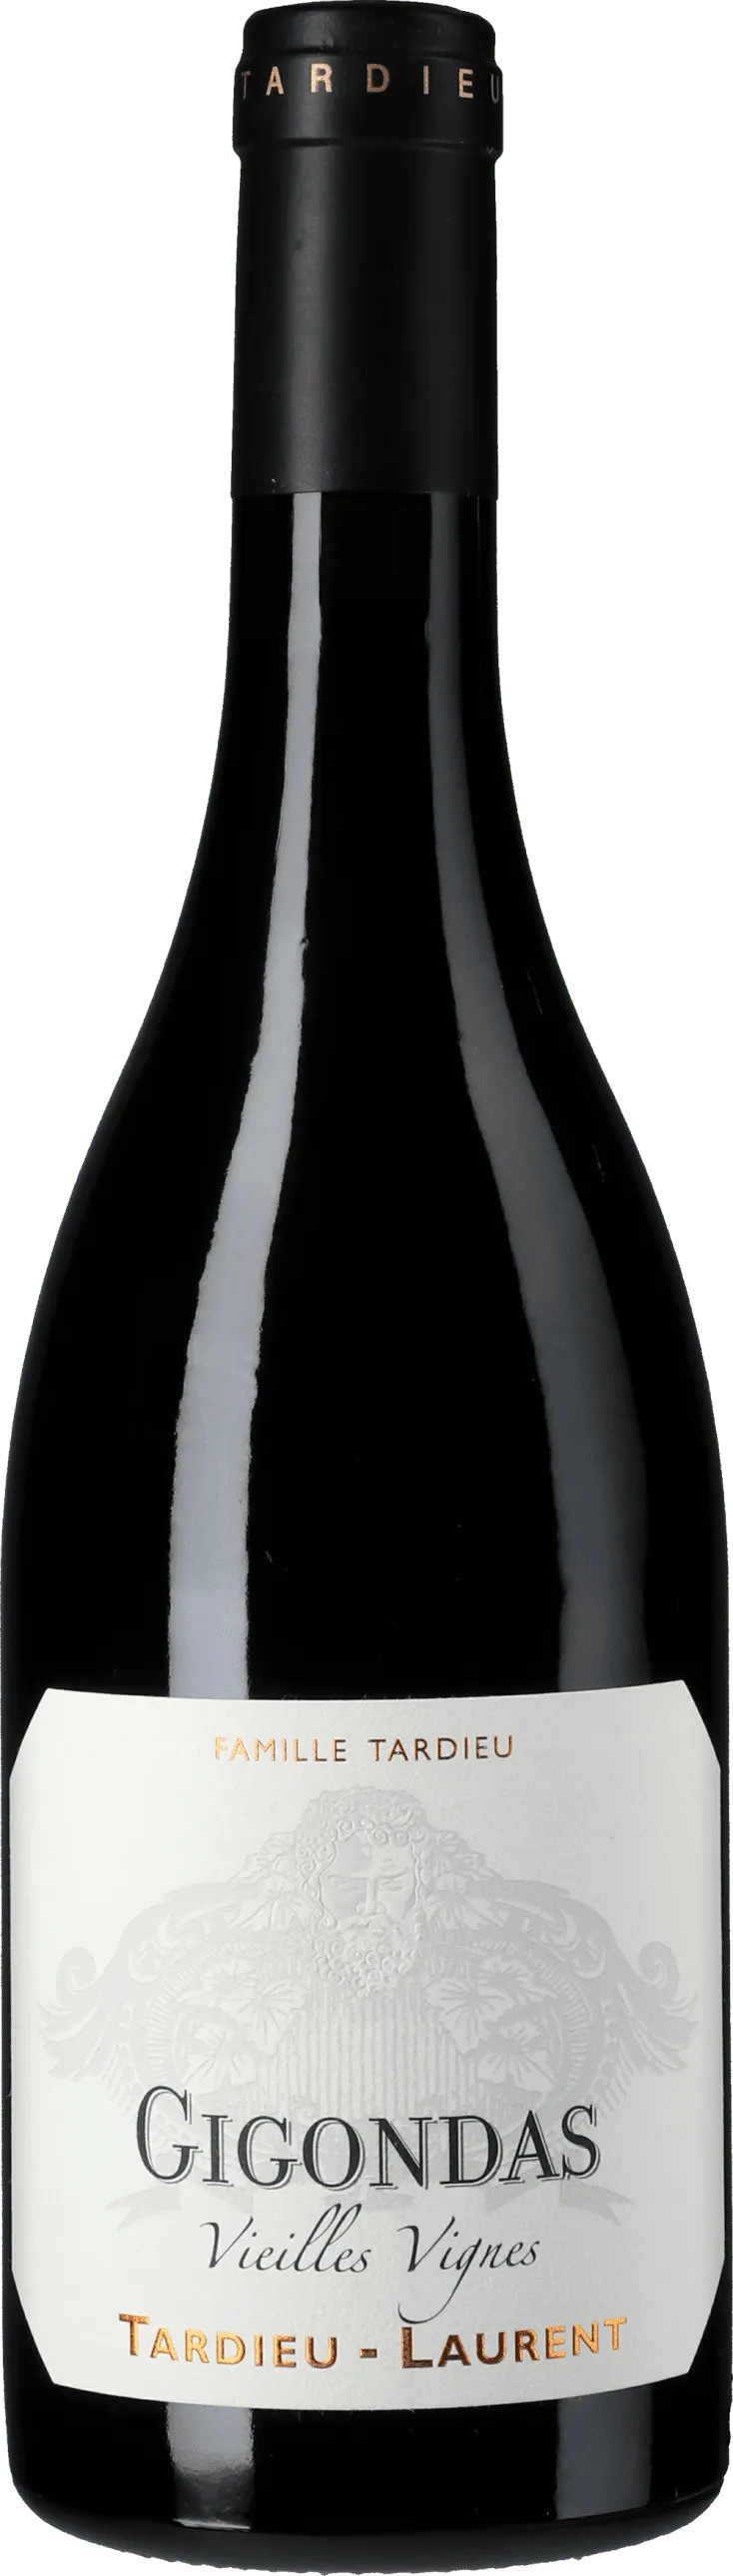 Bottle of Tardieu-Laurent Gigondas Vieilles Vignes from search results